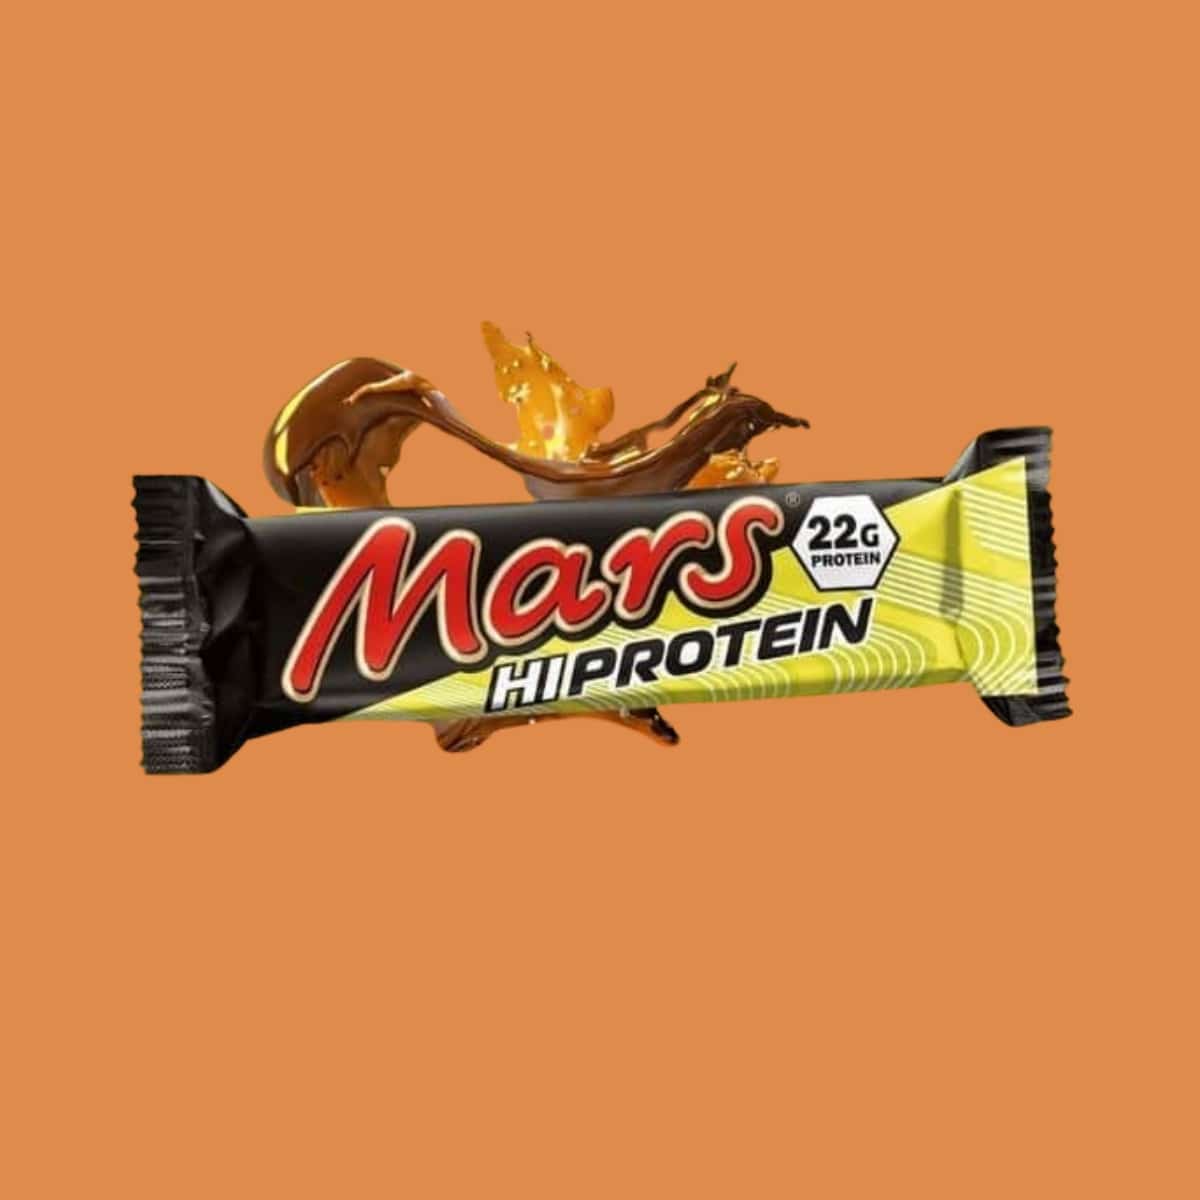 Mars - Proteïnereep - 52 gram - Weer Gezond(igd)